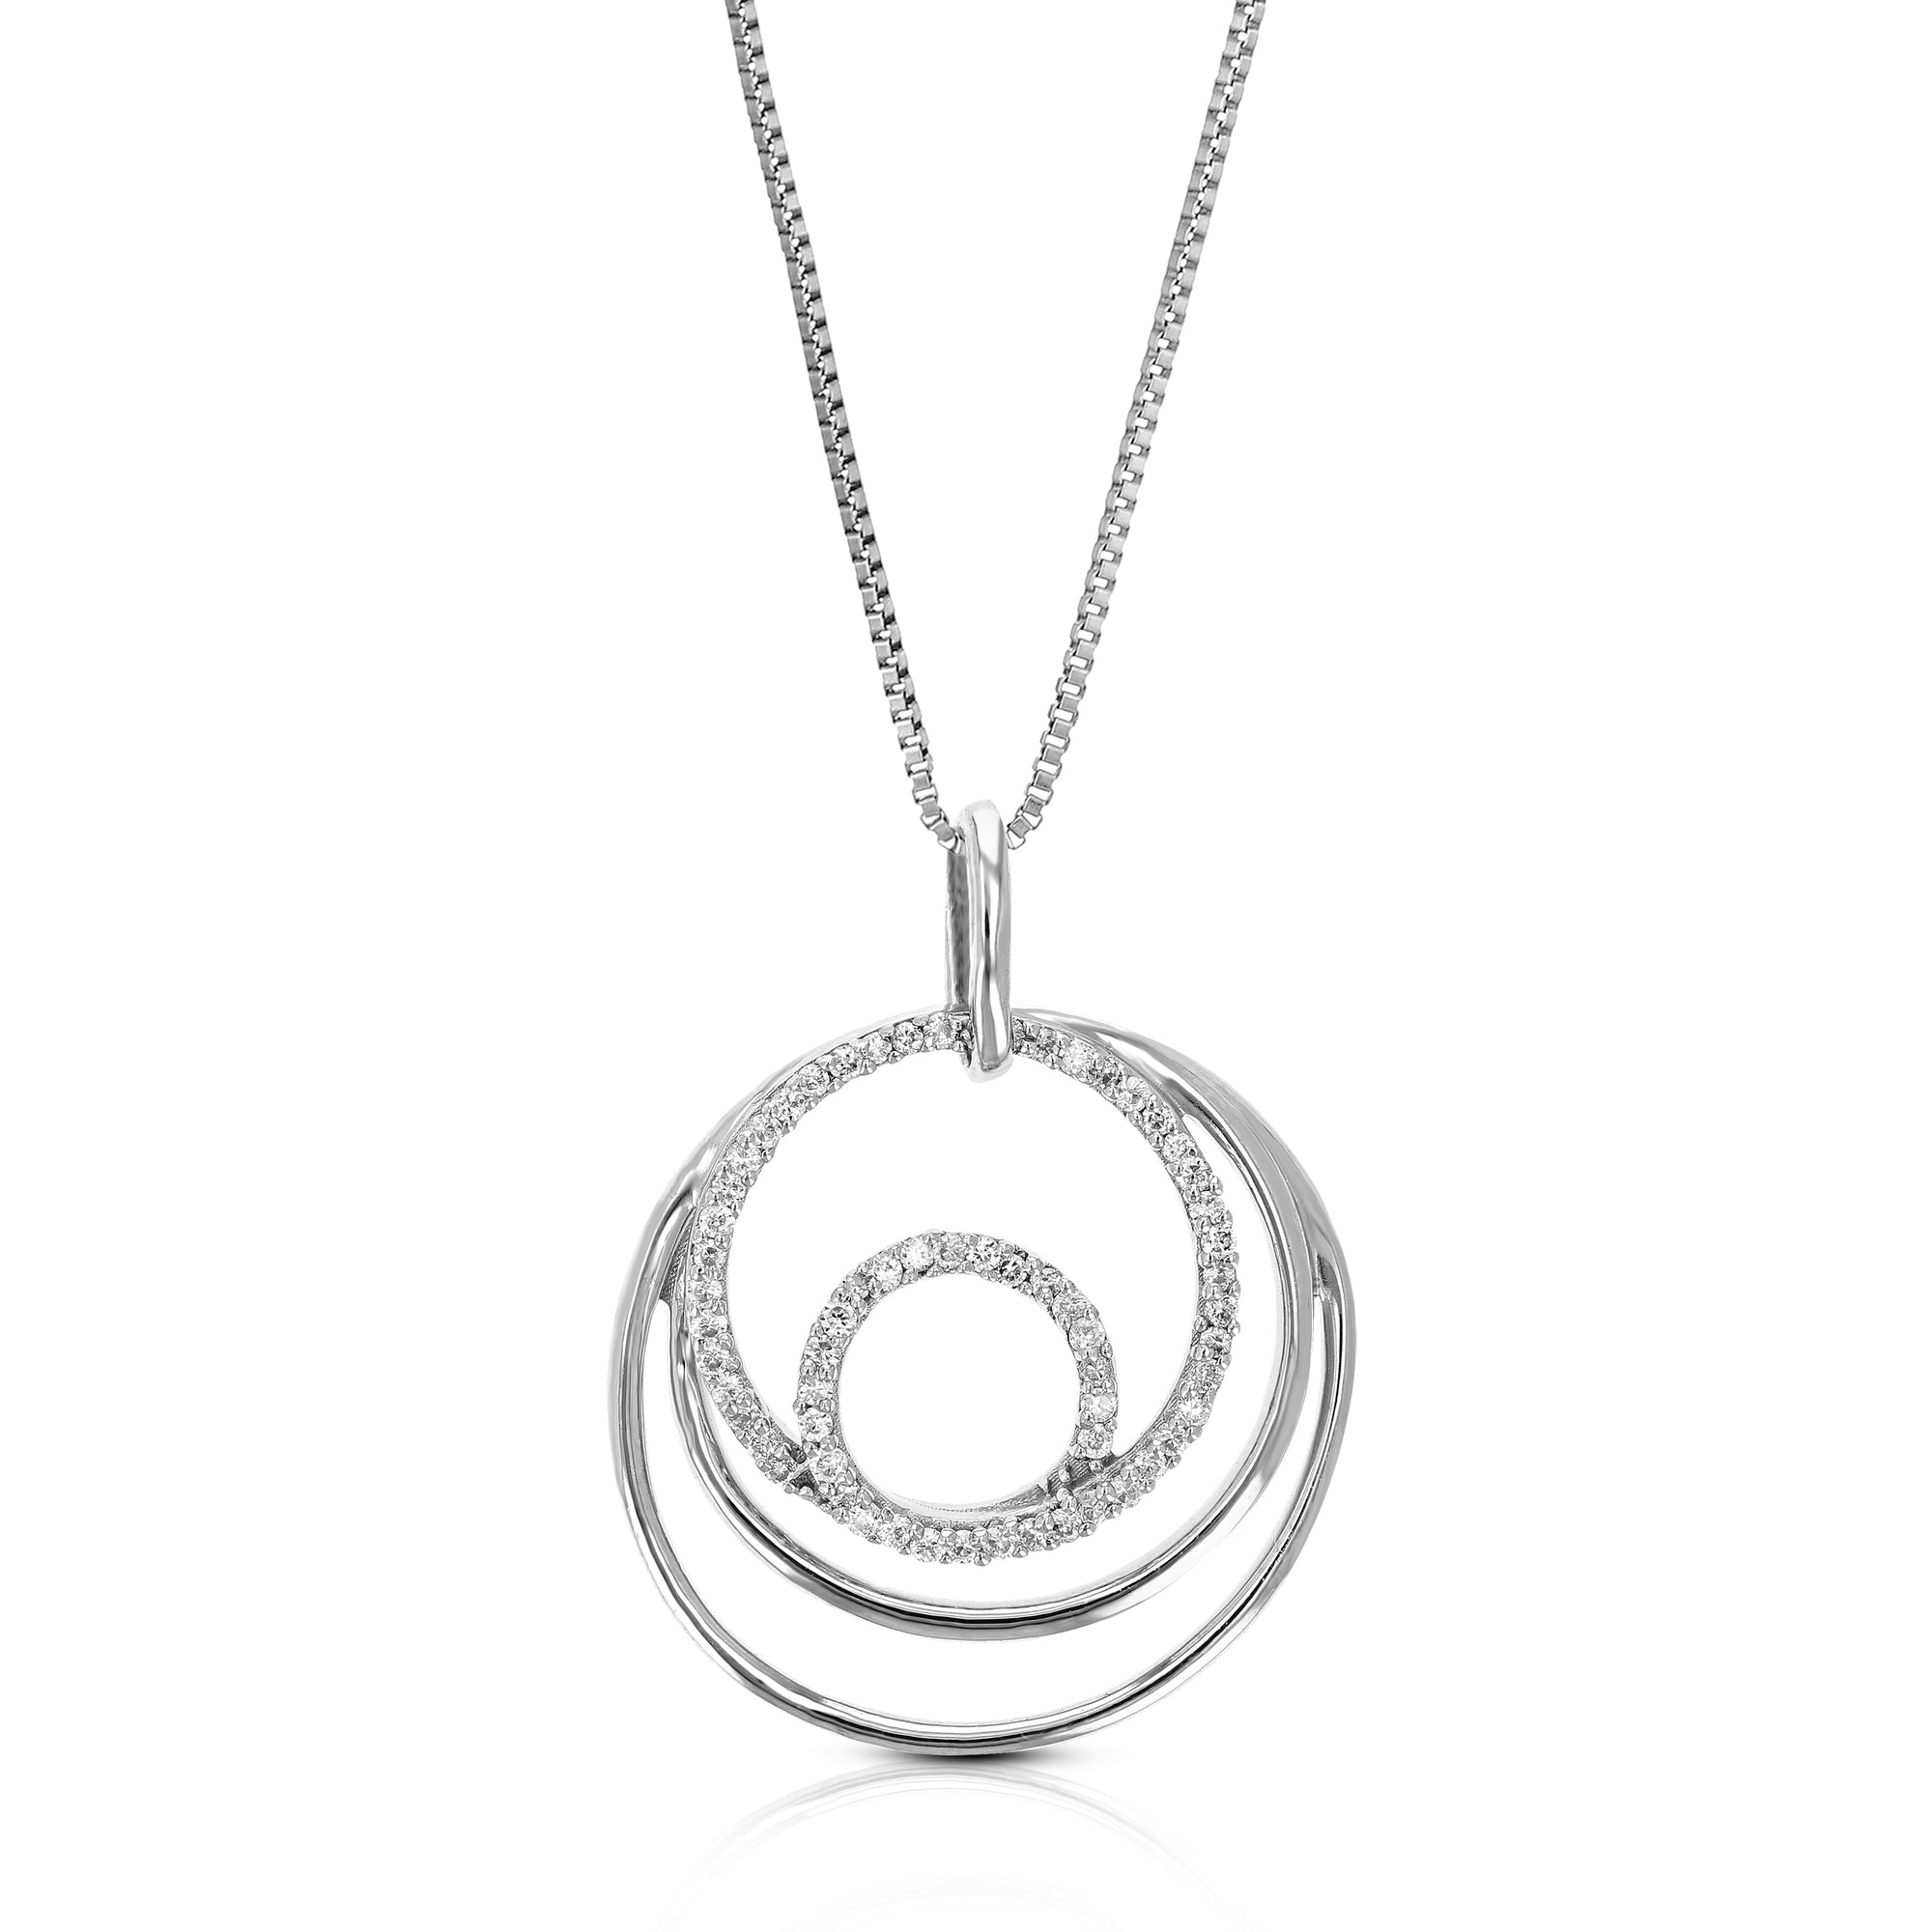 1/8 cttw Diamond Pendant Necklace for Women, Lab Grown Diamond Pendant Necklace in .925 Sterling Silver with Chain, Size 2/3 Inch